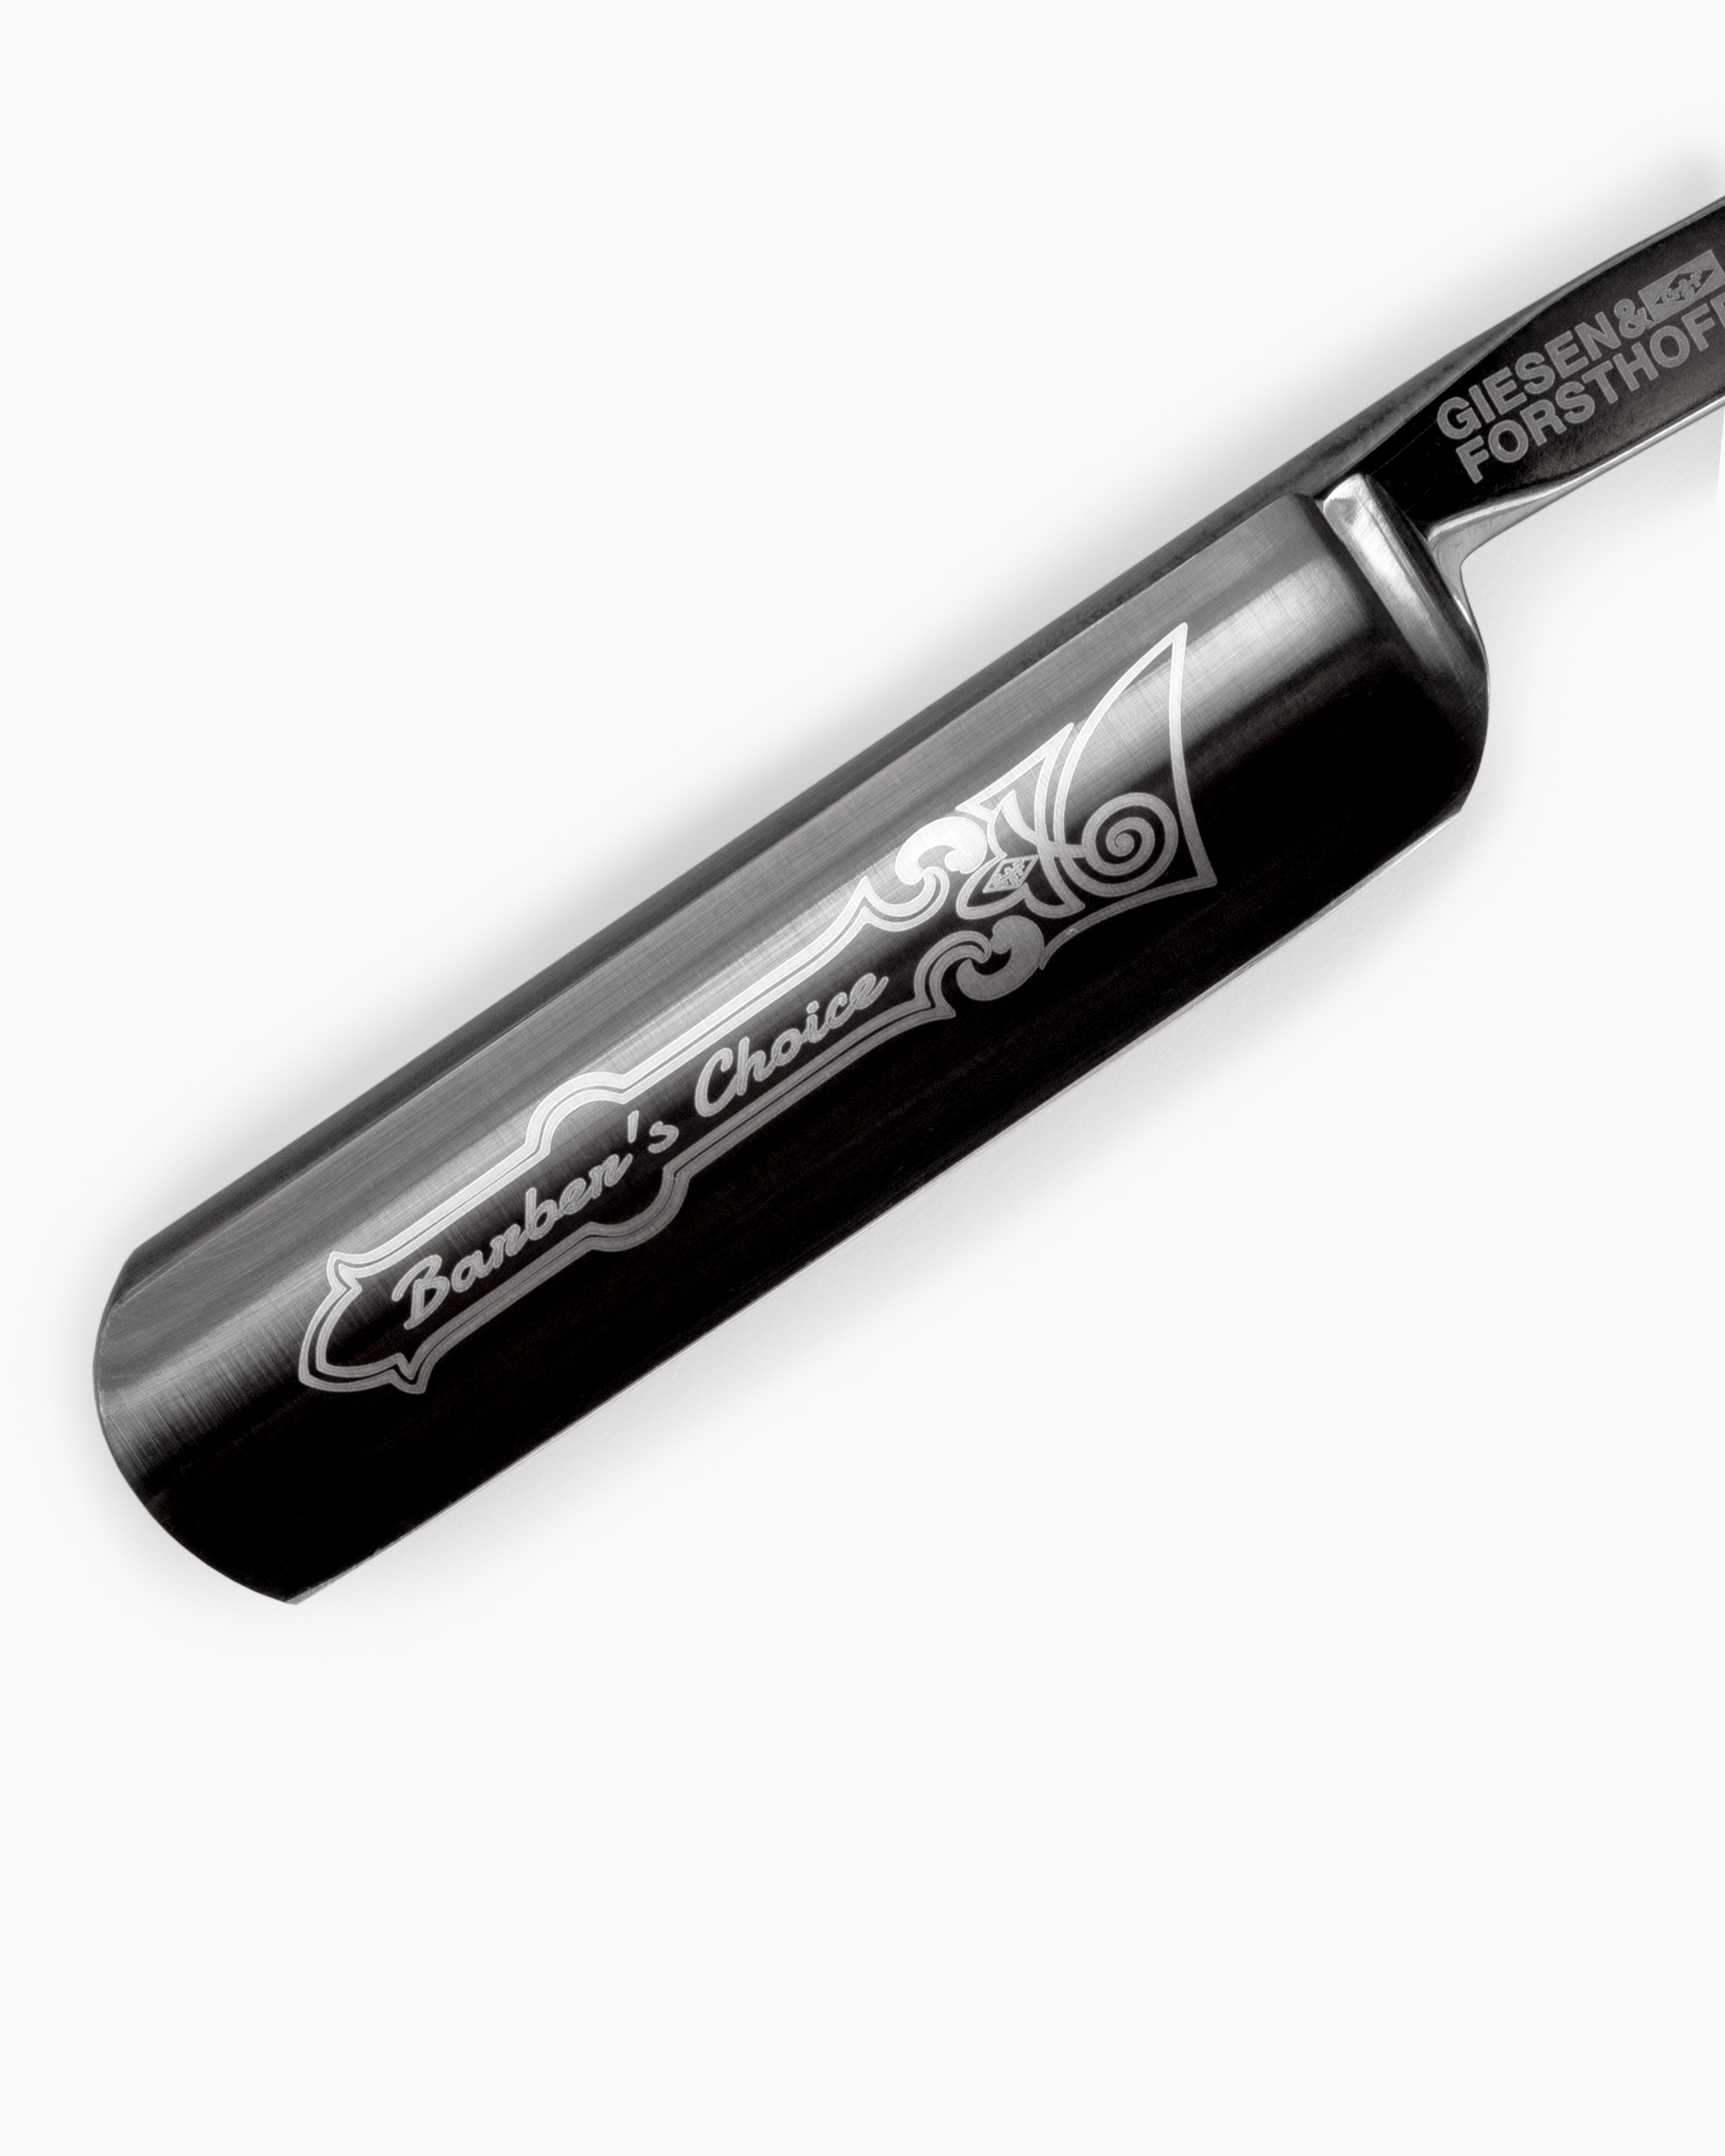 G&F Timor®Barber's Choice Rasiermesser 5/8 cs mit Carbon-Aluschale